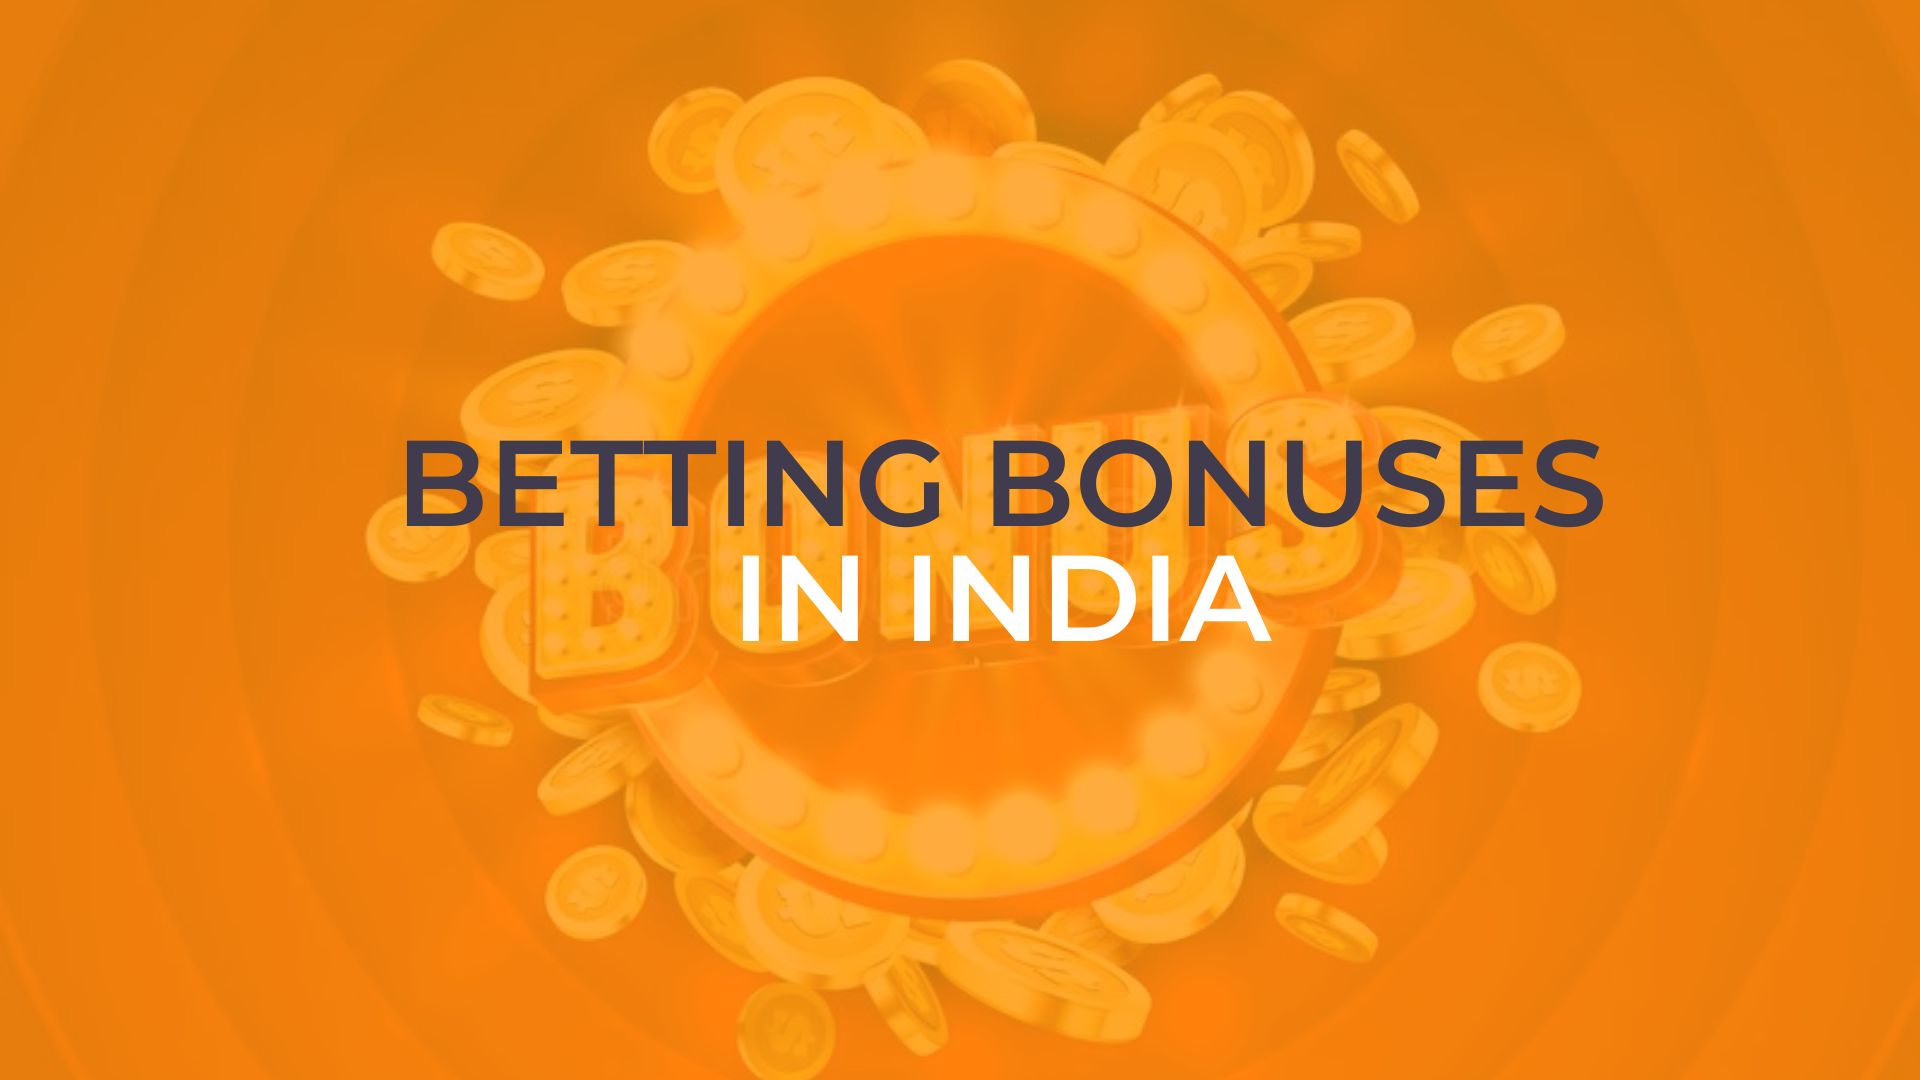 The Best Betting Bonuses in India